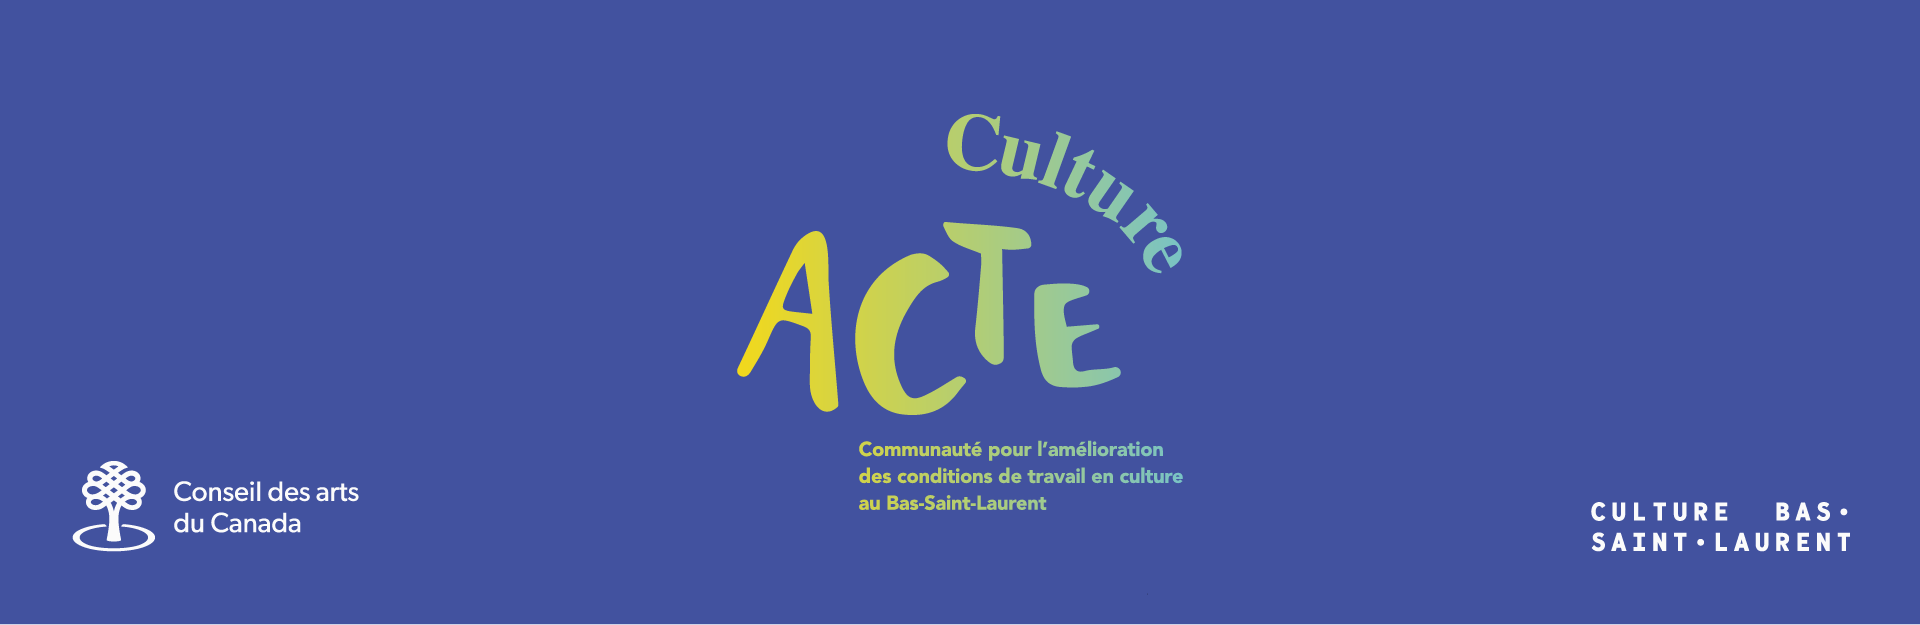 ACTE-Culture